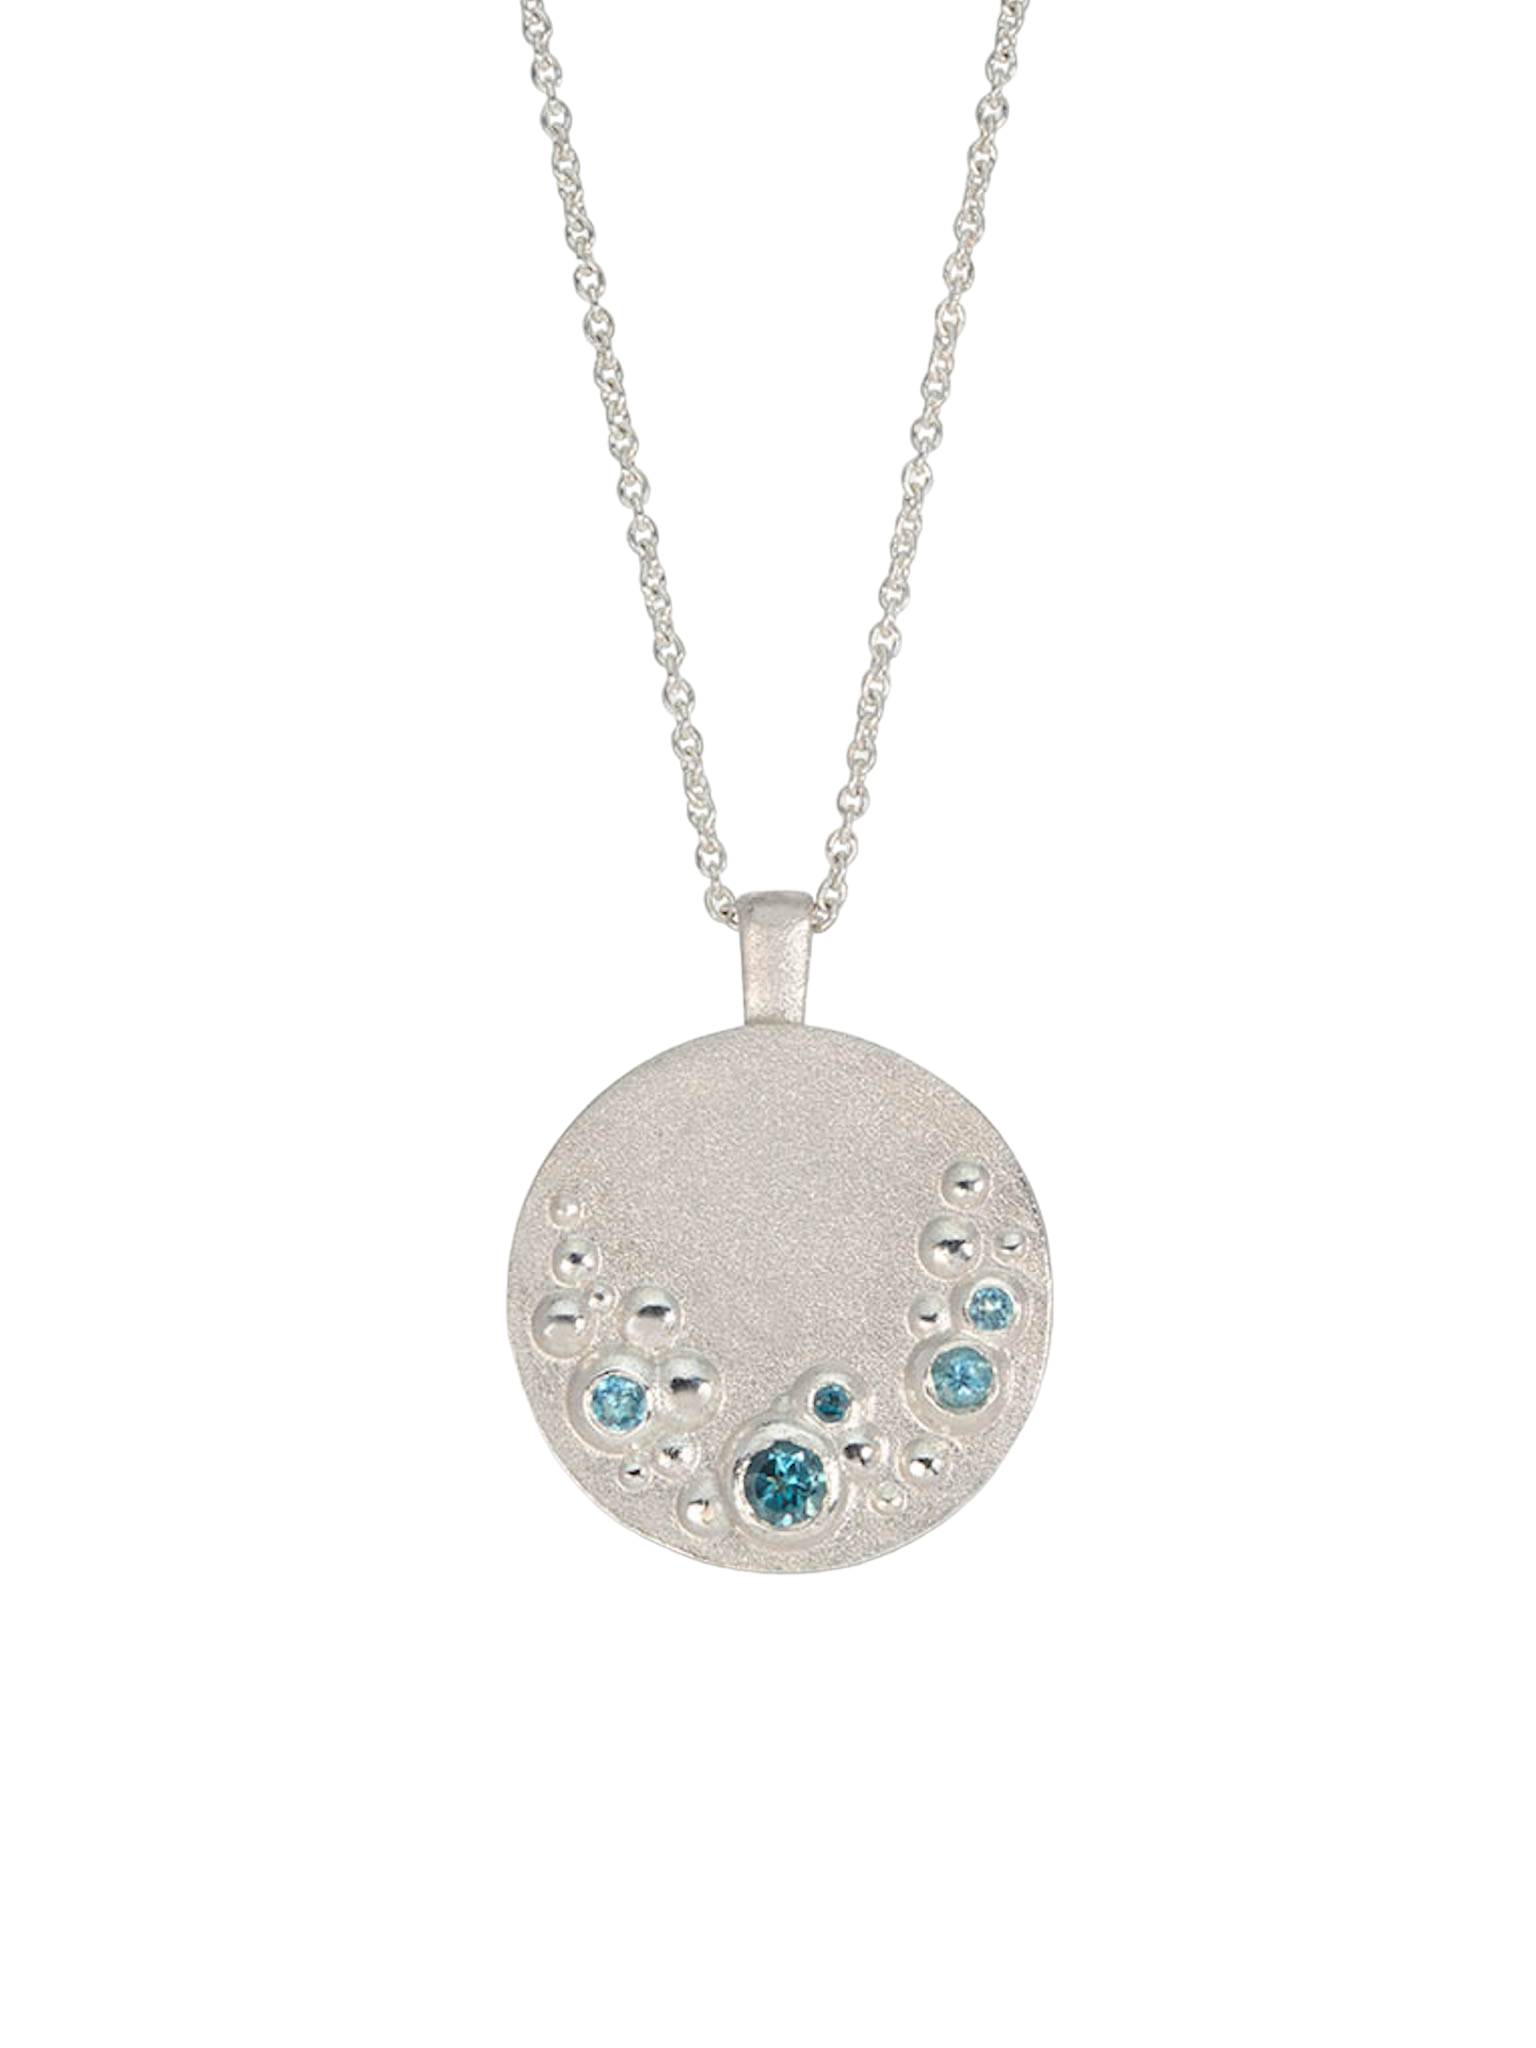 Decorio large round pendant with blue sapphires